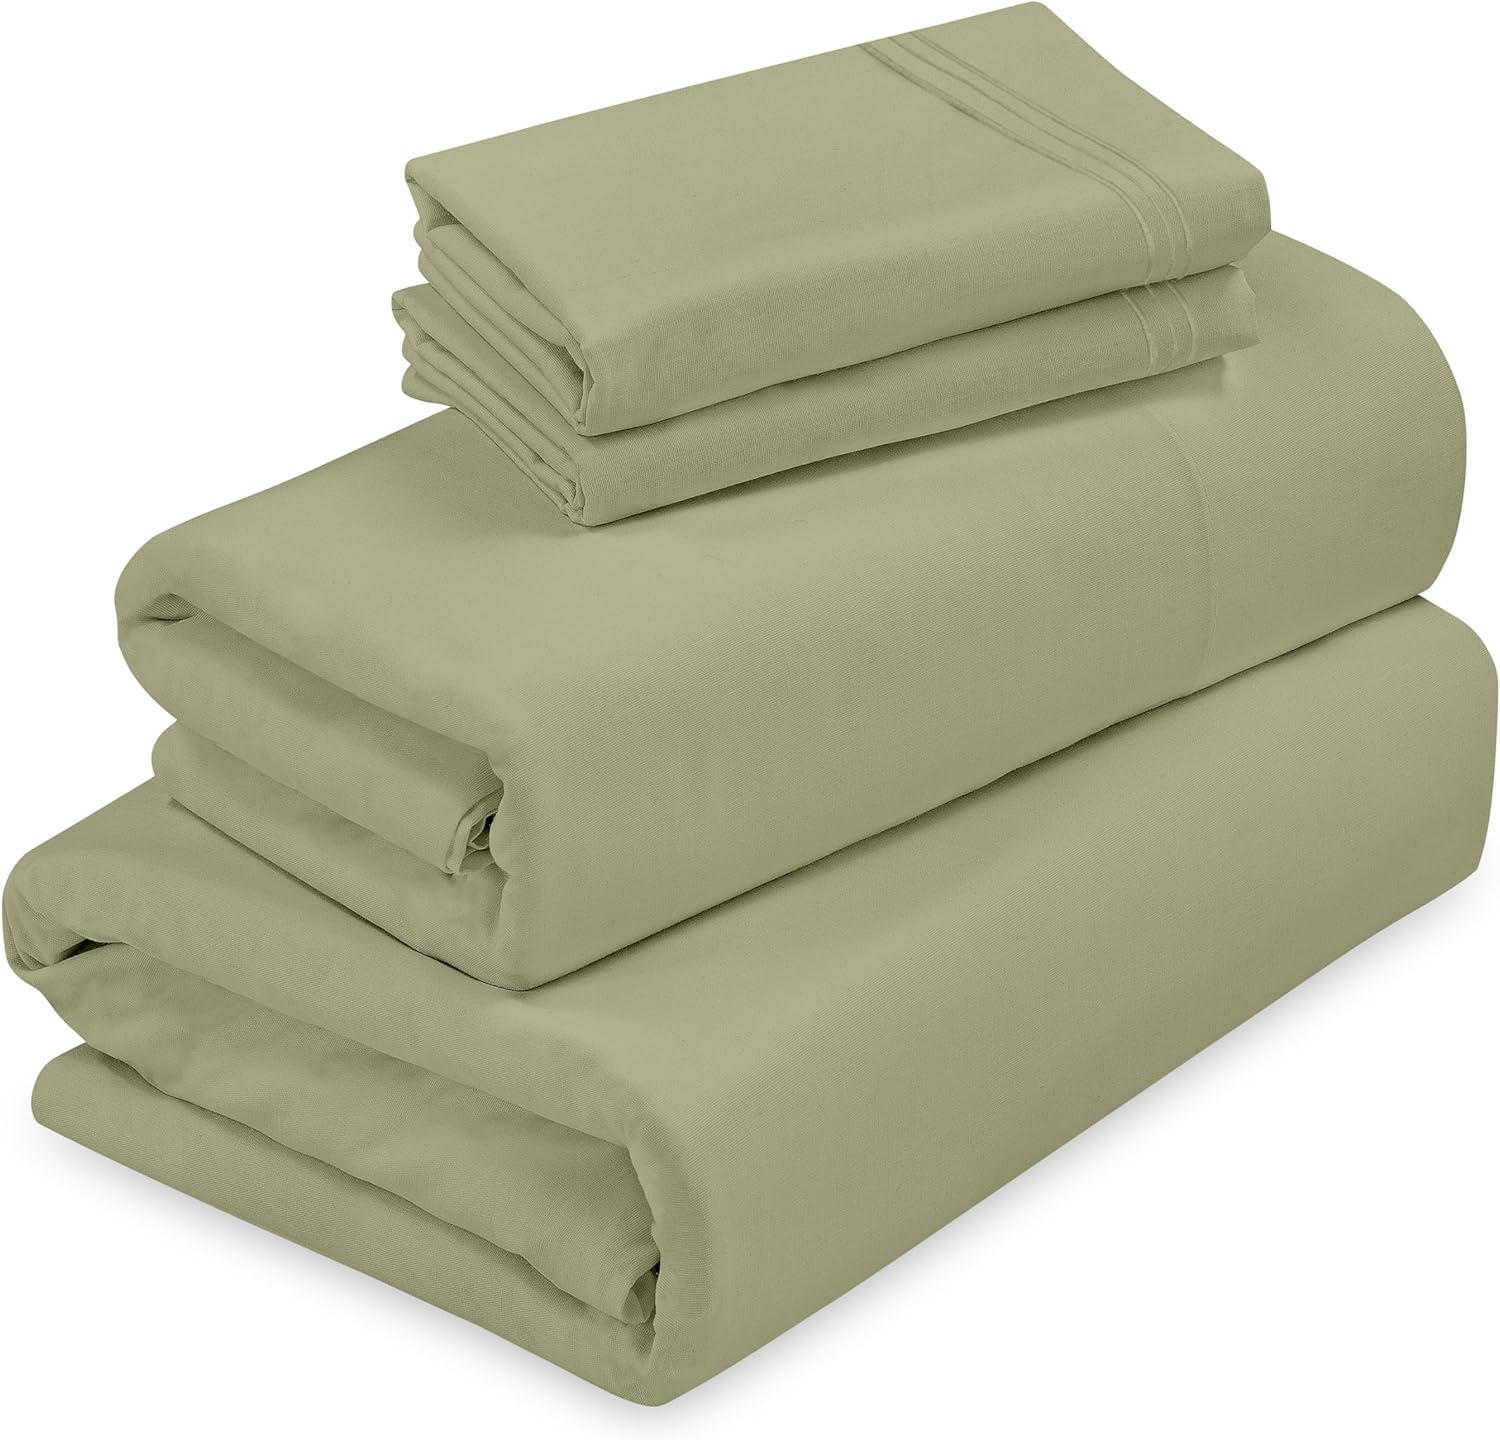 ROYALE LINENS - 4 Piece Full Bed Sheet - Soft Brushed Microfiber 1800 Bedding Set - 1 Fitted Sheet, 1 Flat Sheet, 2 Pillow Case - Wrinkle & Fade Resistant Luxury Full Size Sheet Set (Full, Sage Green)